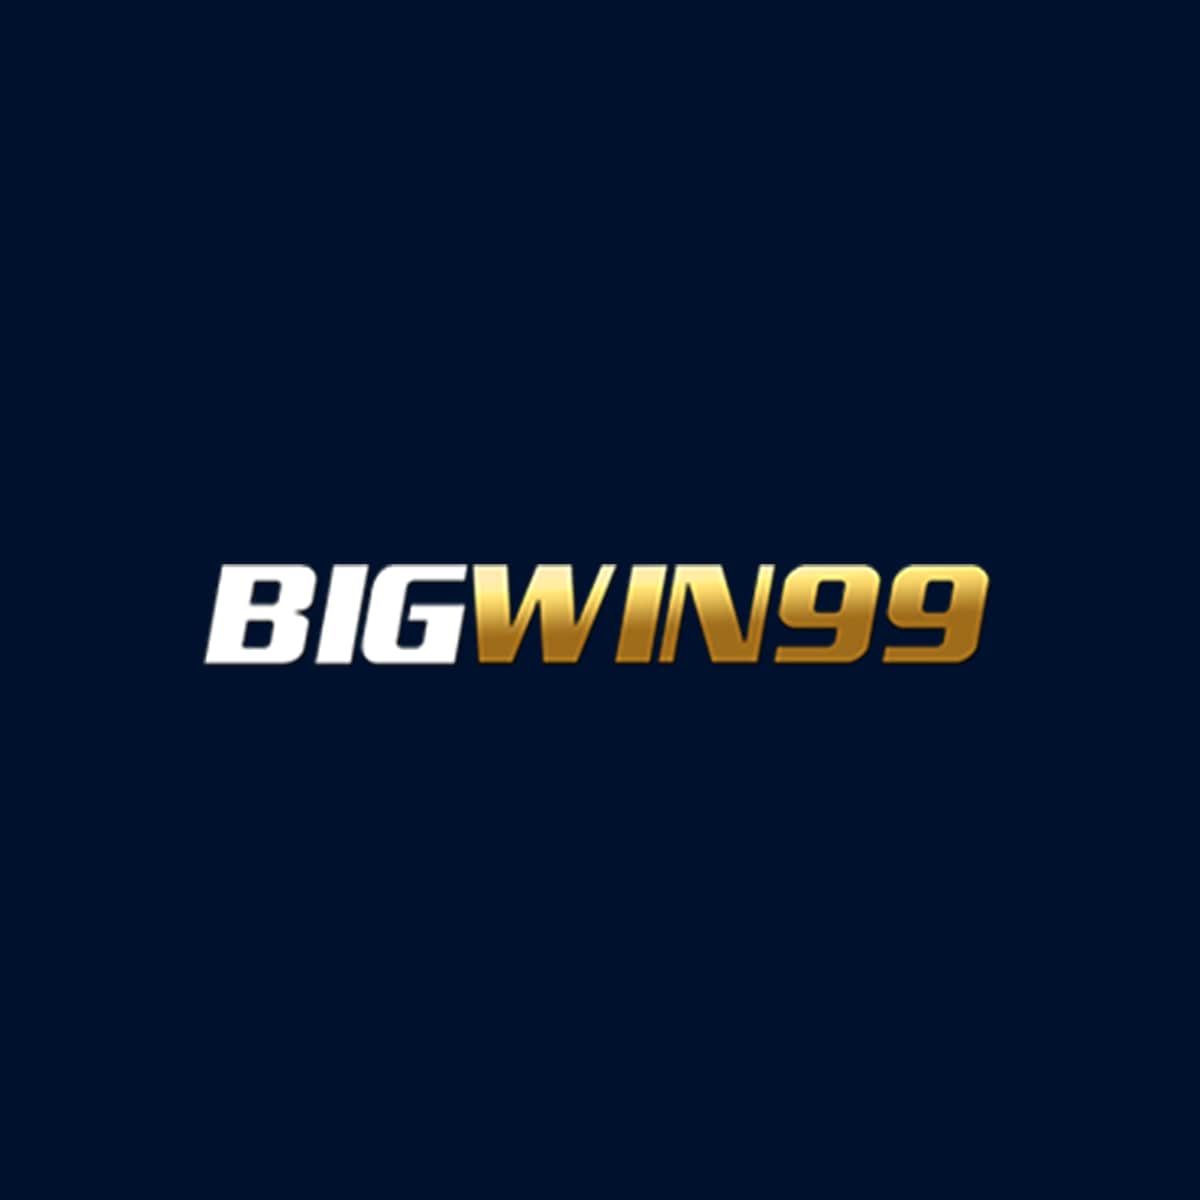 BigWin99 Casino Malaysia Online Logo